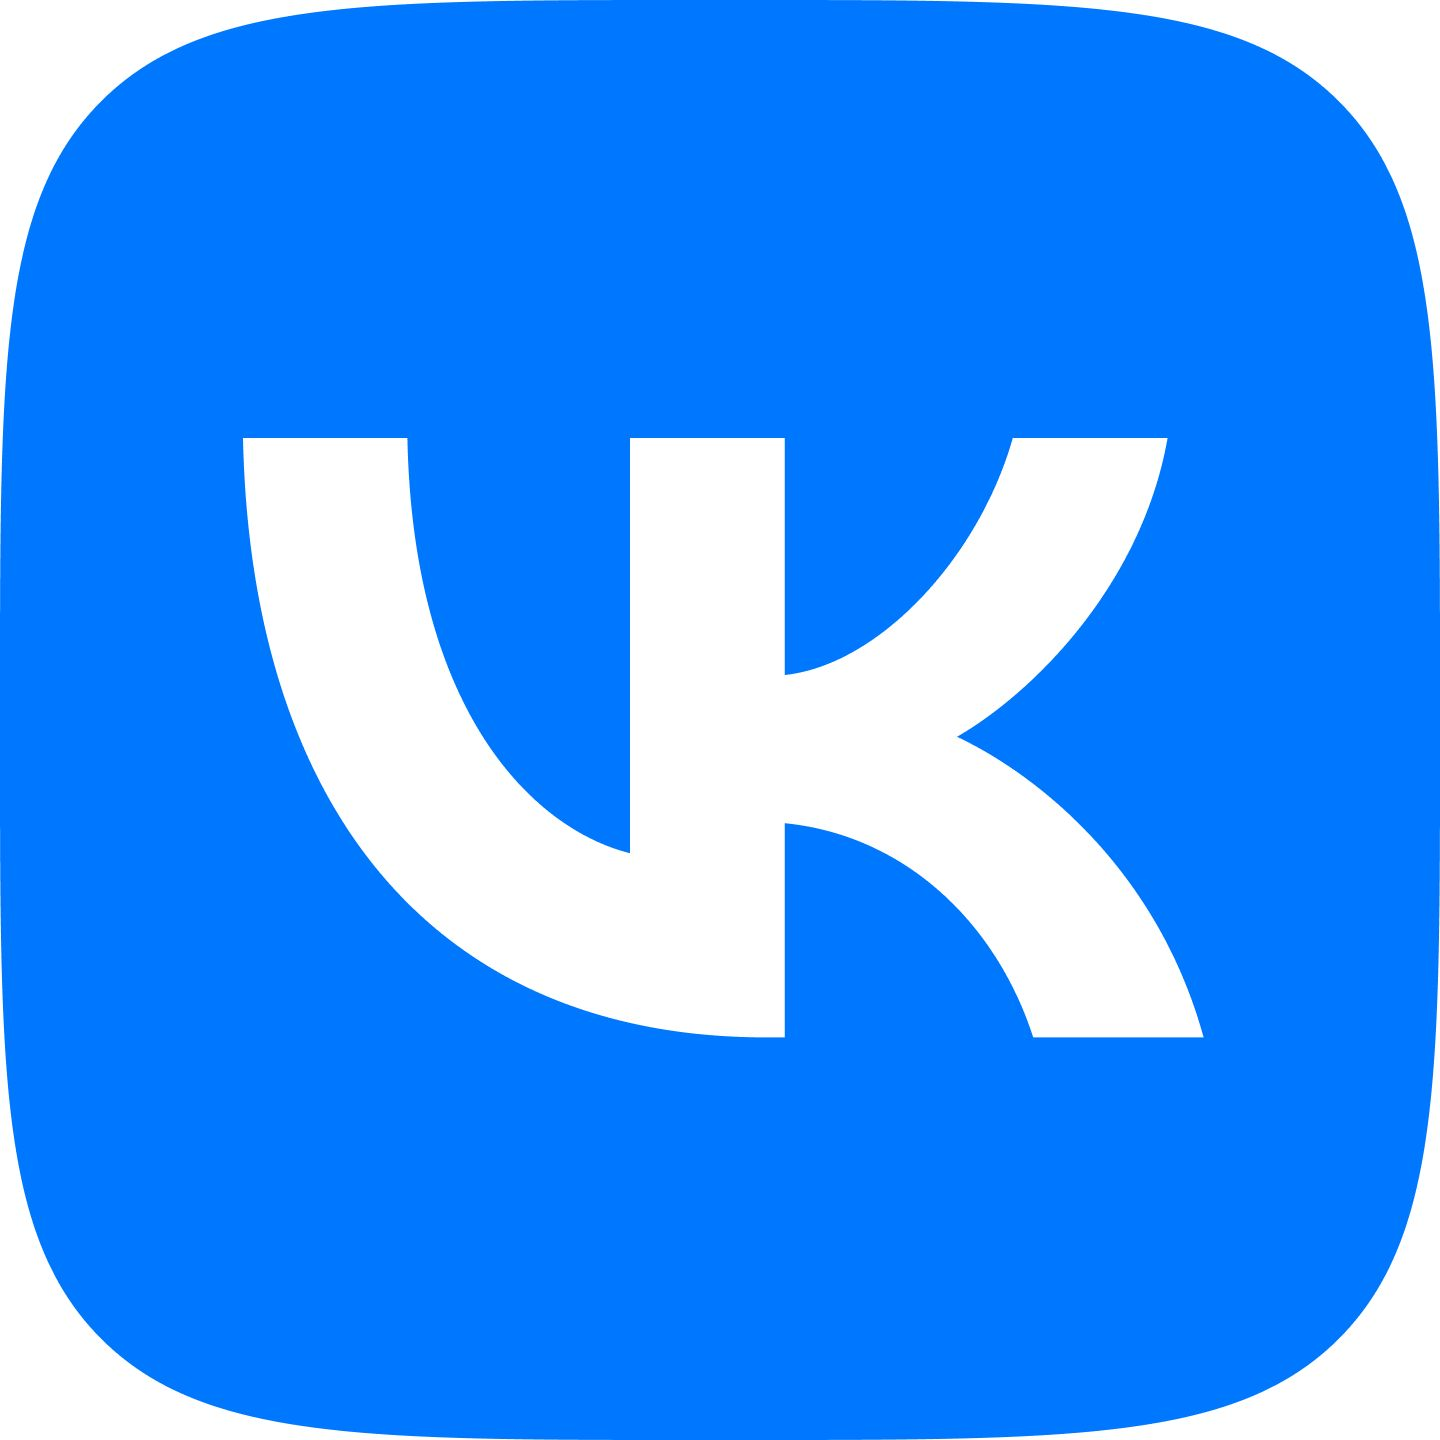 VK_Compact_Logo (1).png